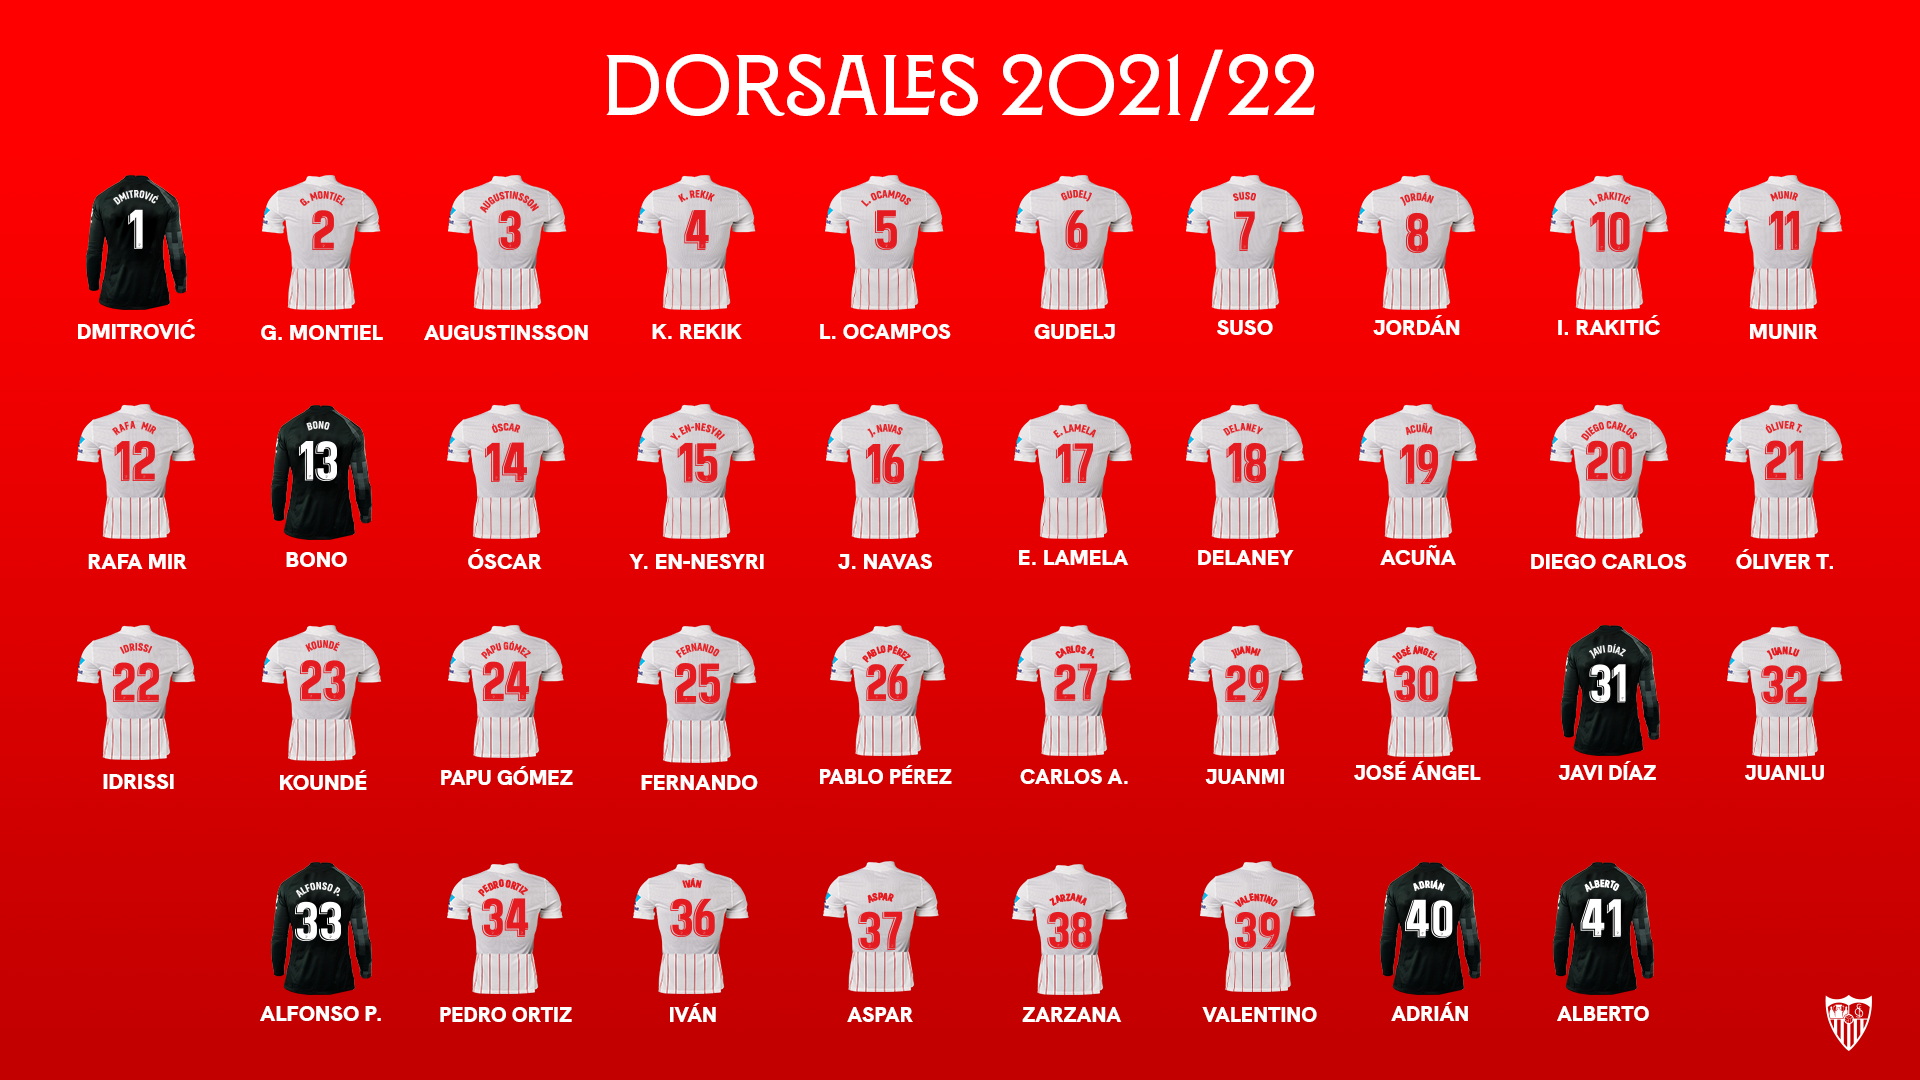 Dorsales 2021/22 del Sevilla FC